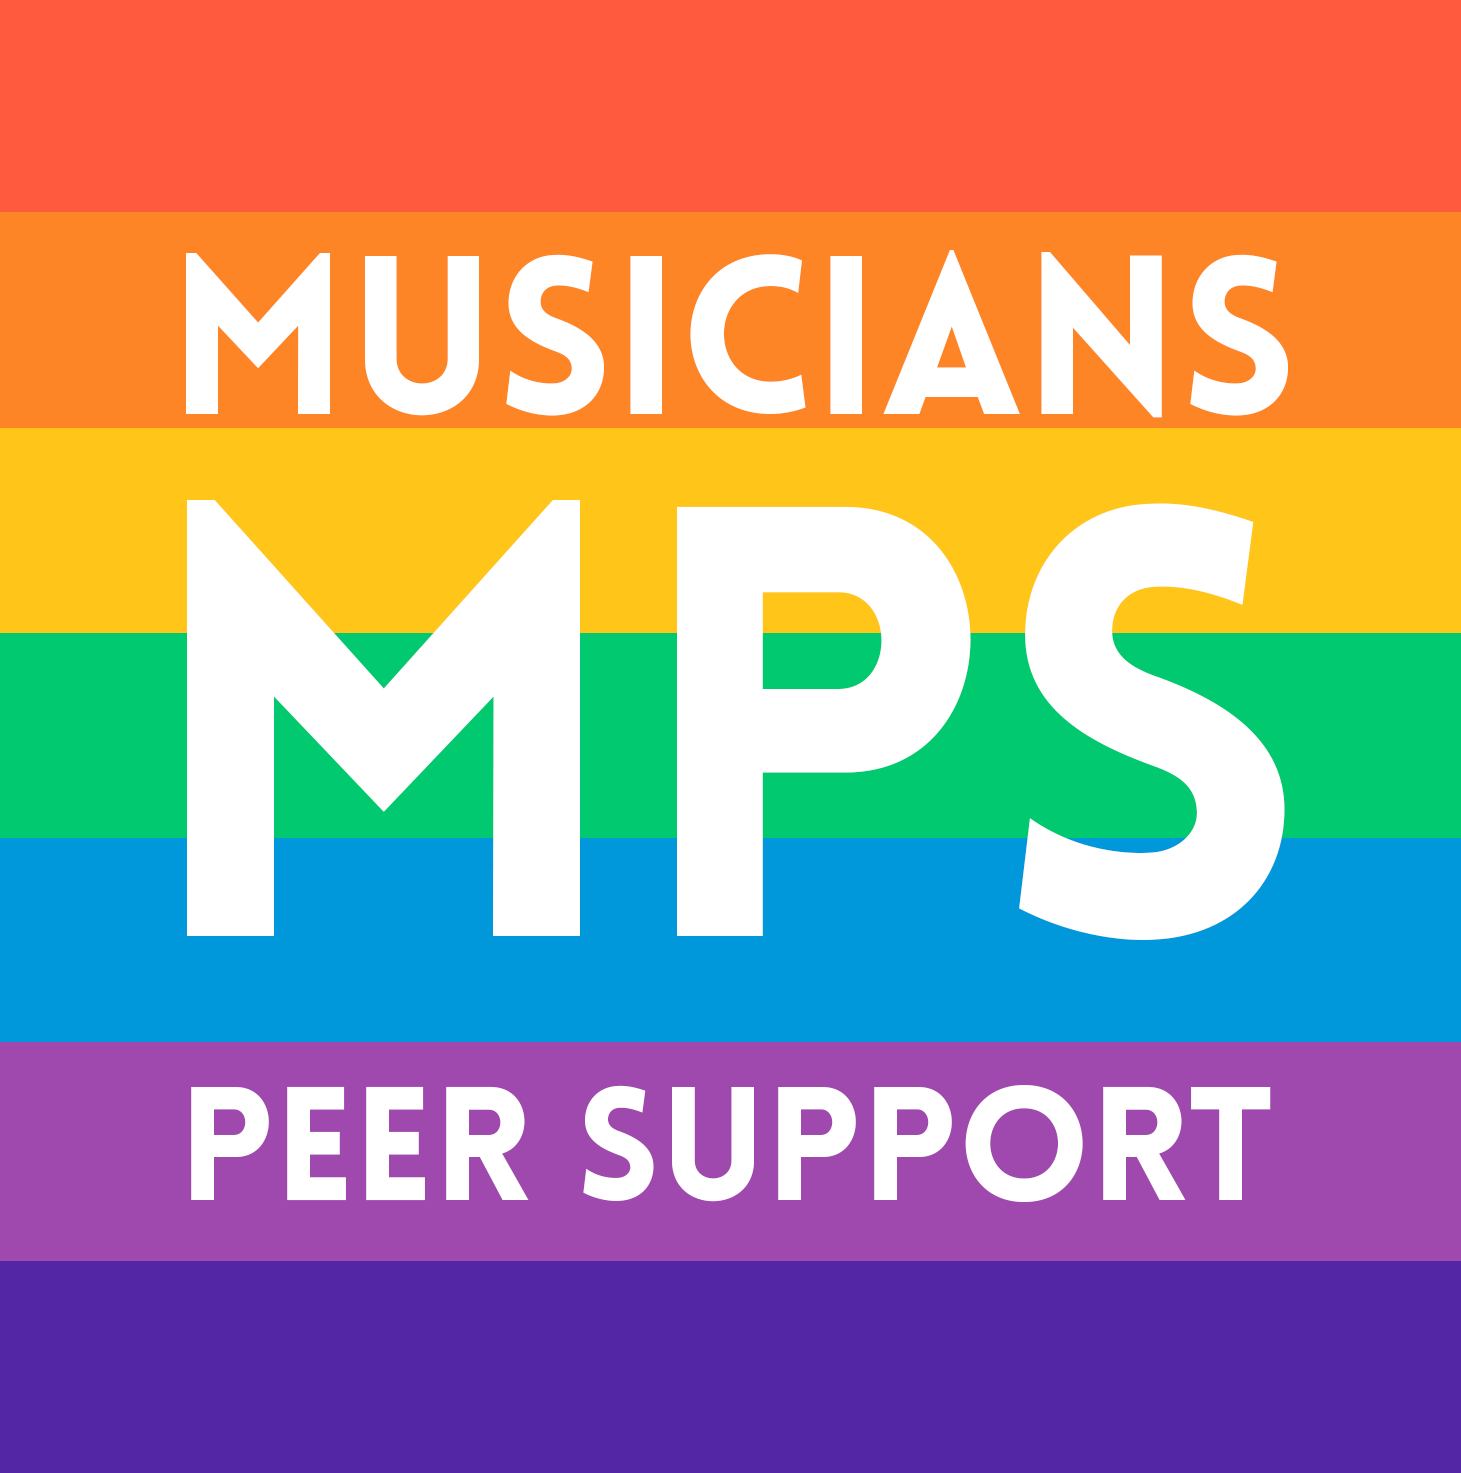 Musicians Peer Support